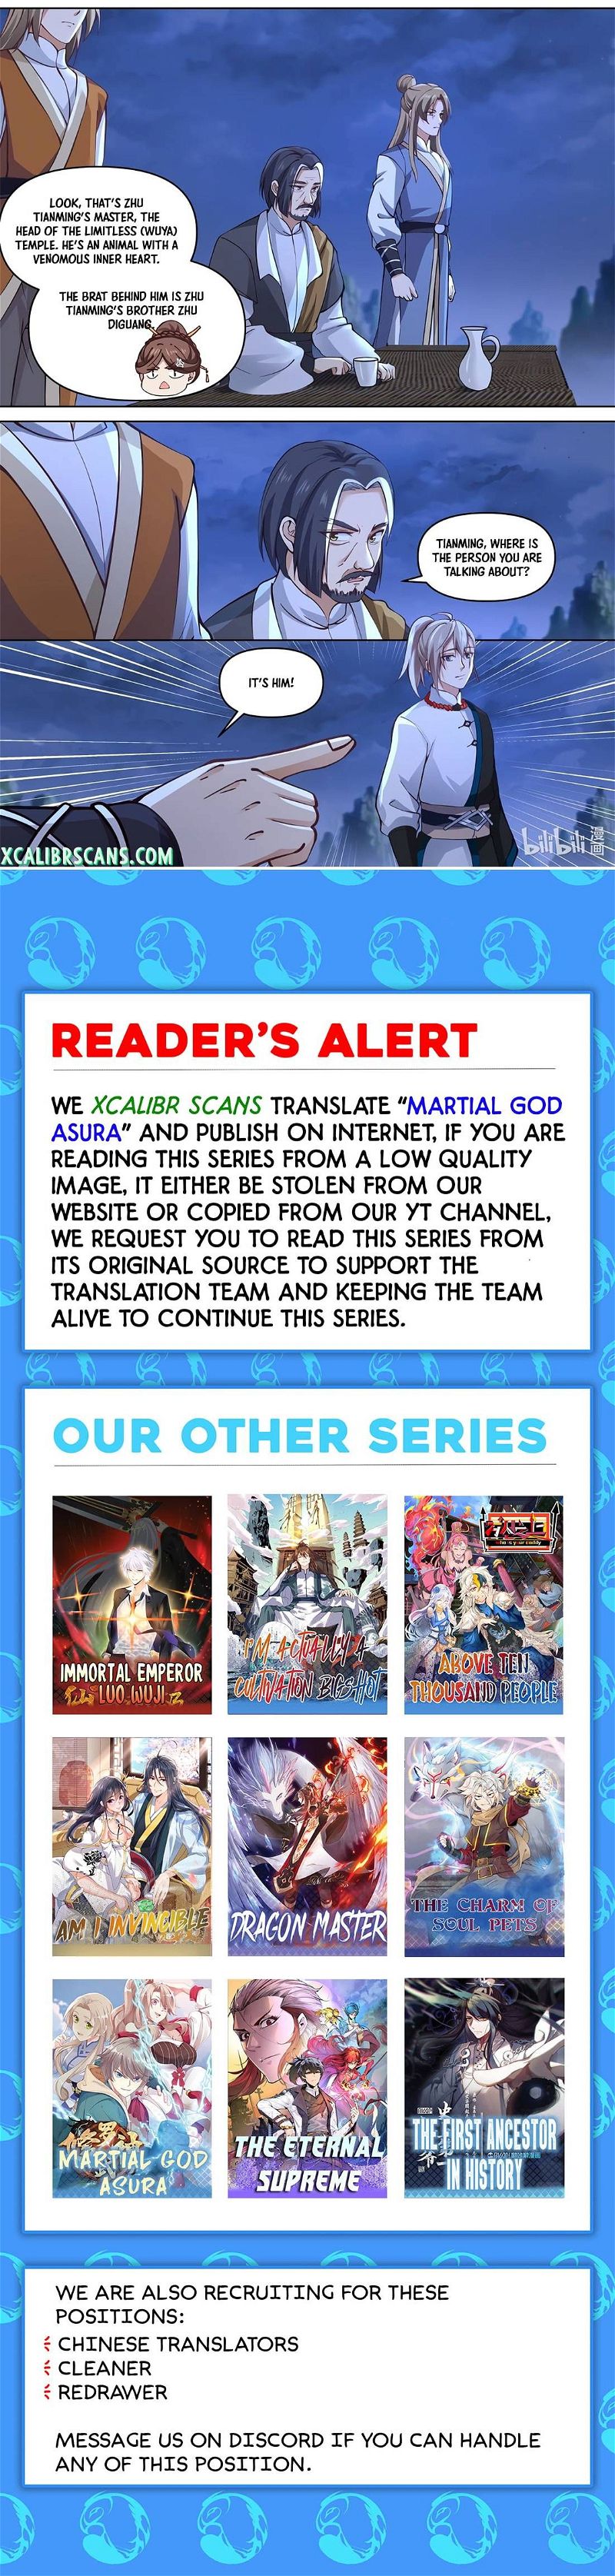 Martial God Asura Chapter 464 page 10